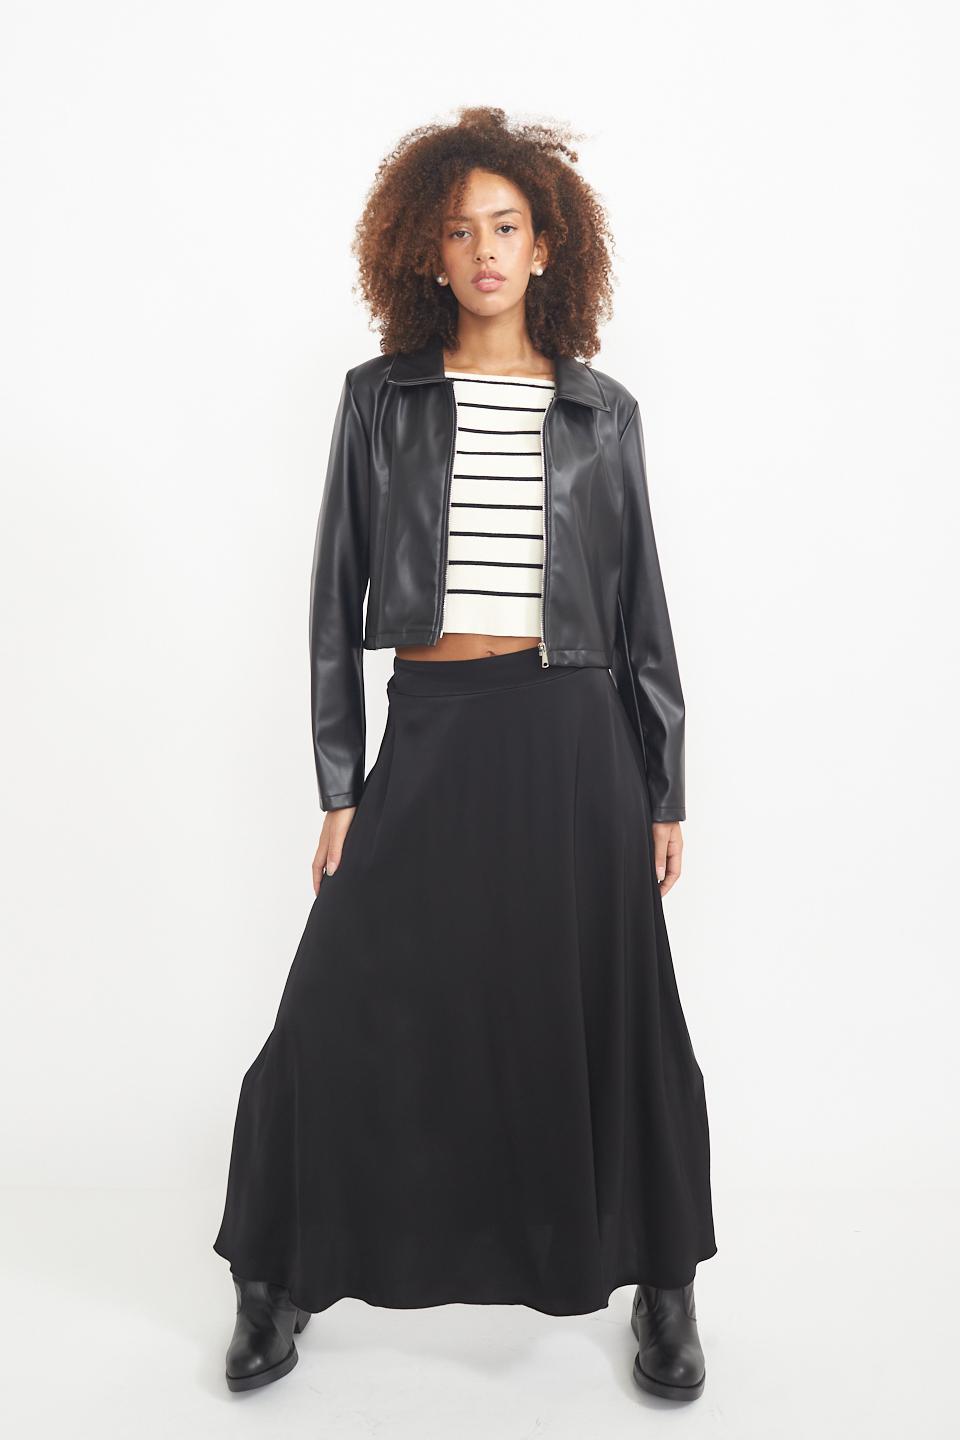 Giacca corta nera donna, giacca con zip